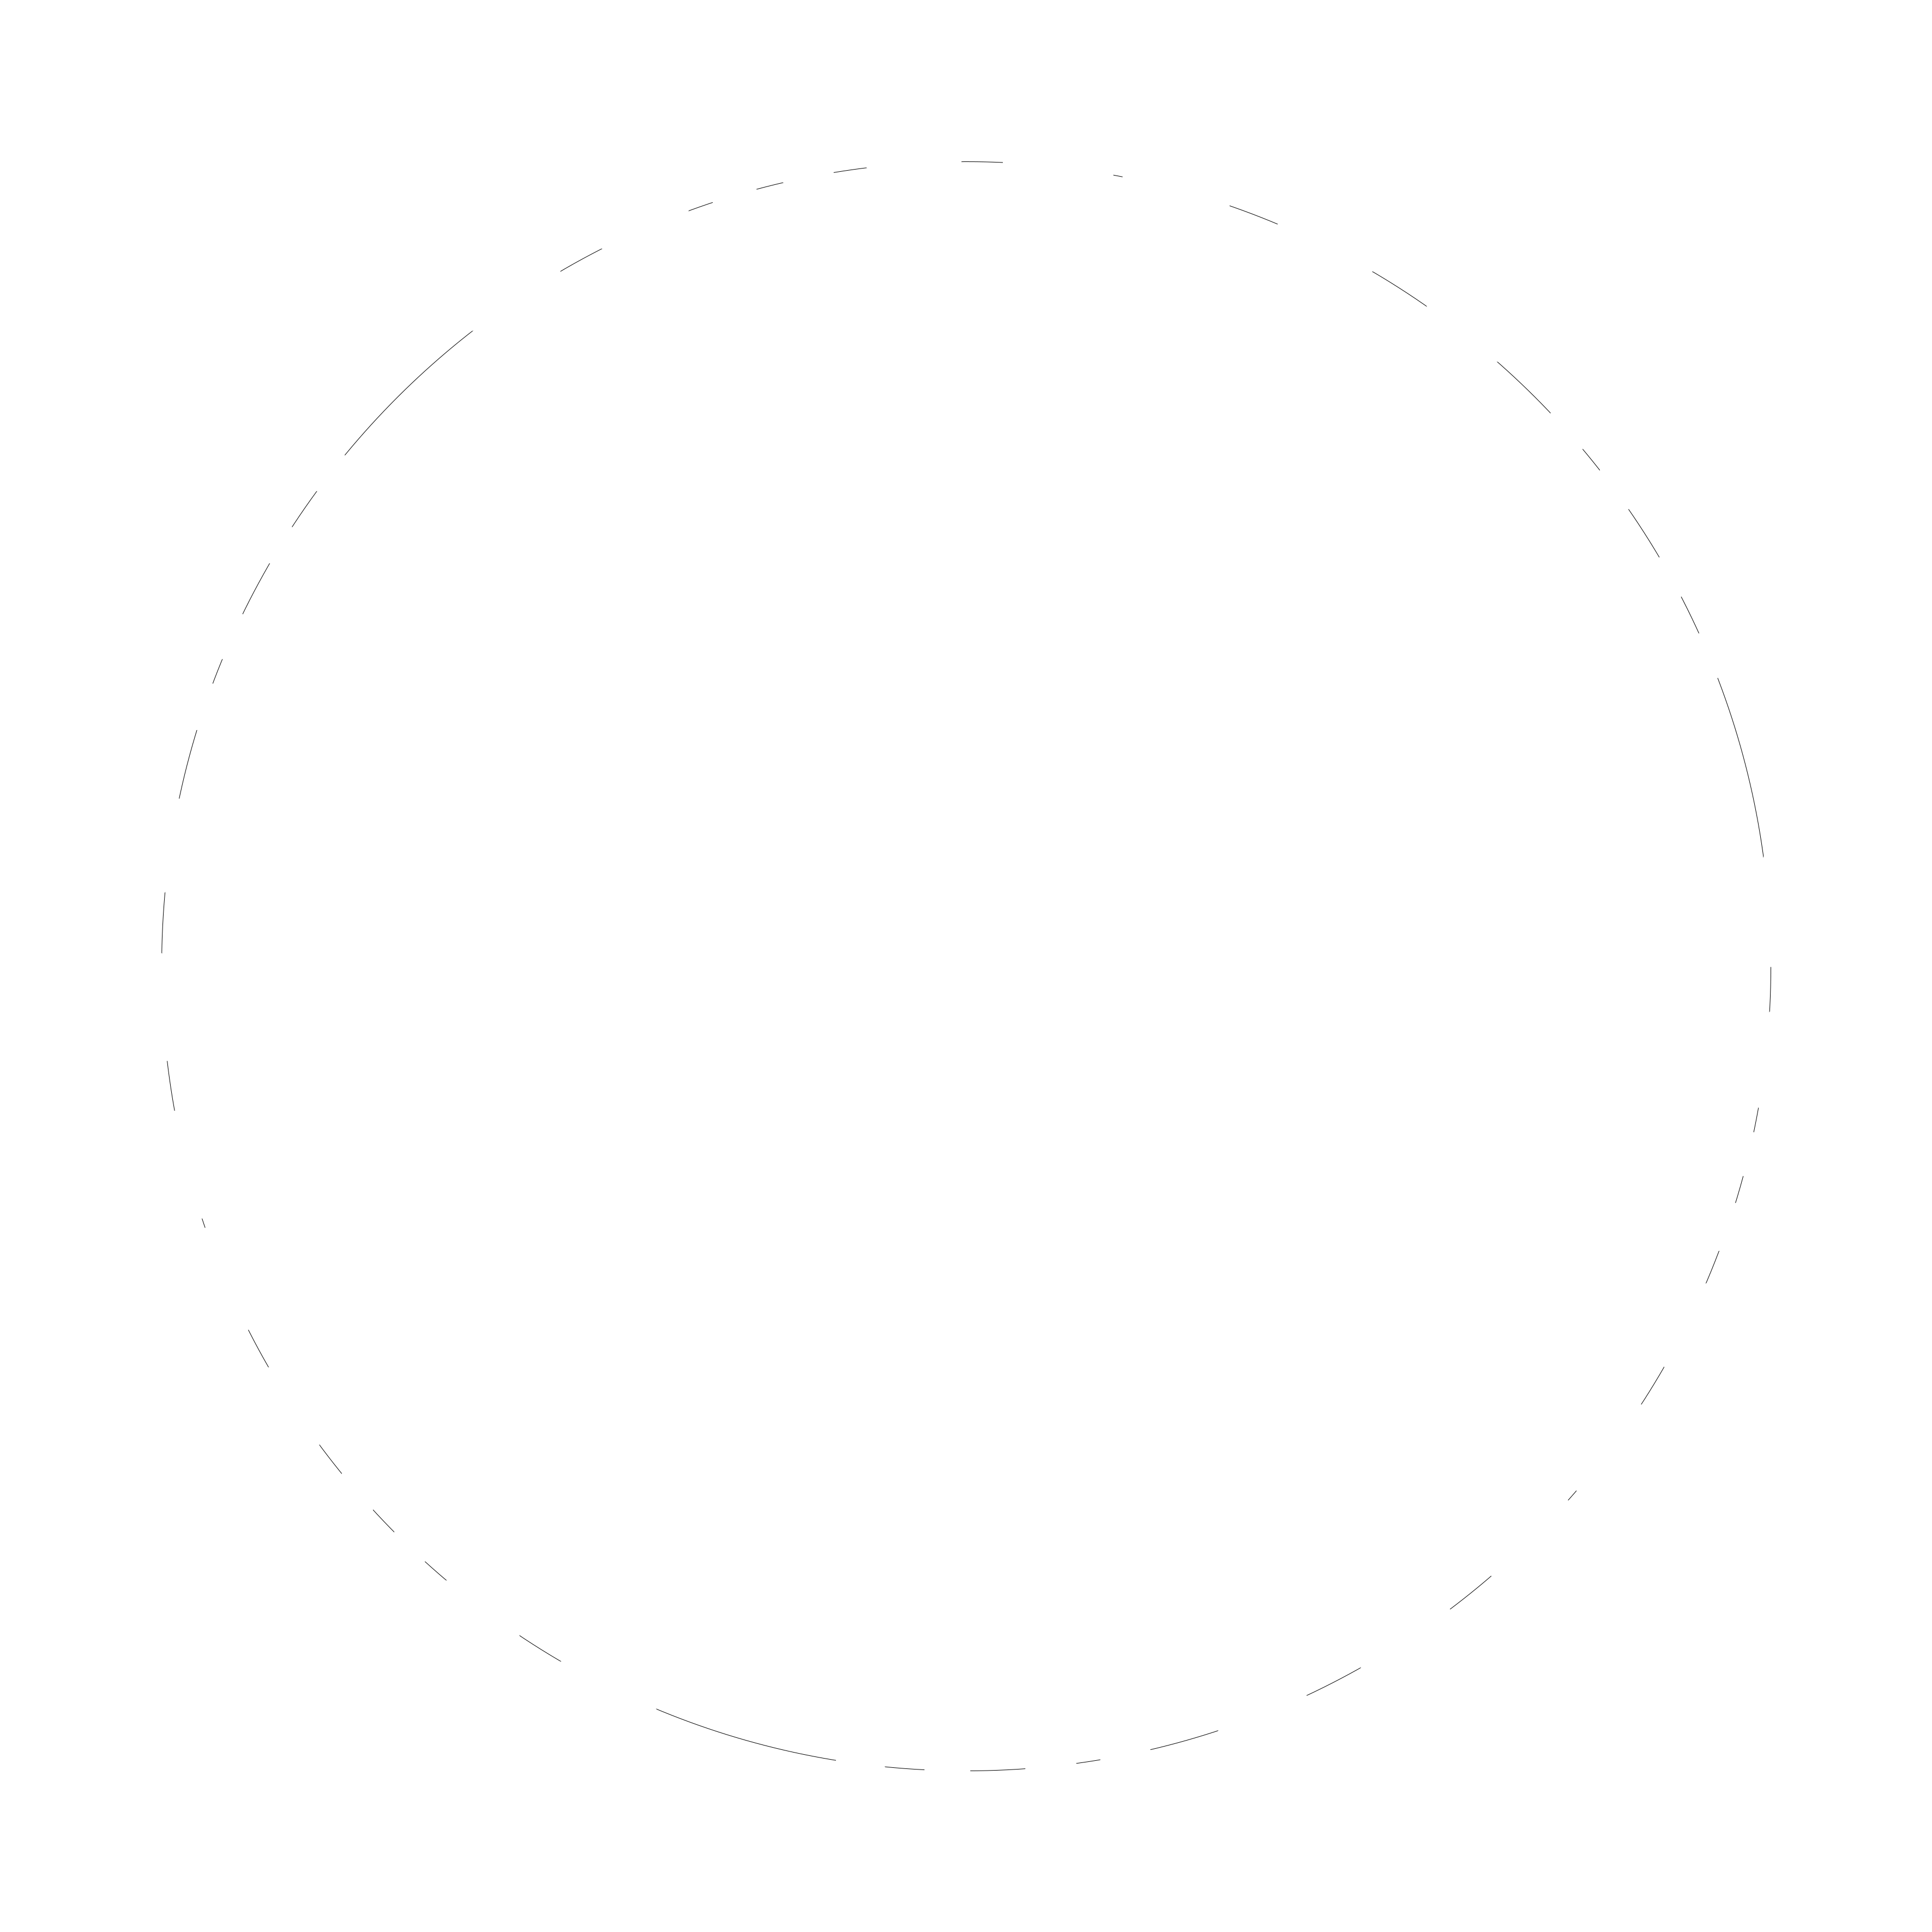 Scroll Down 1 fv2m